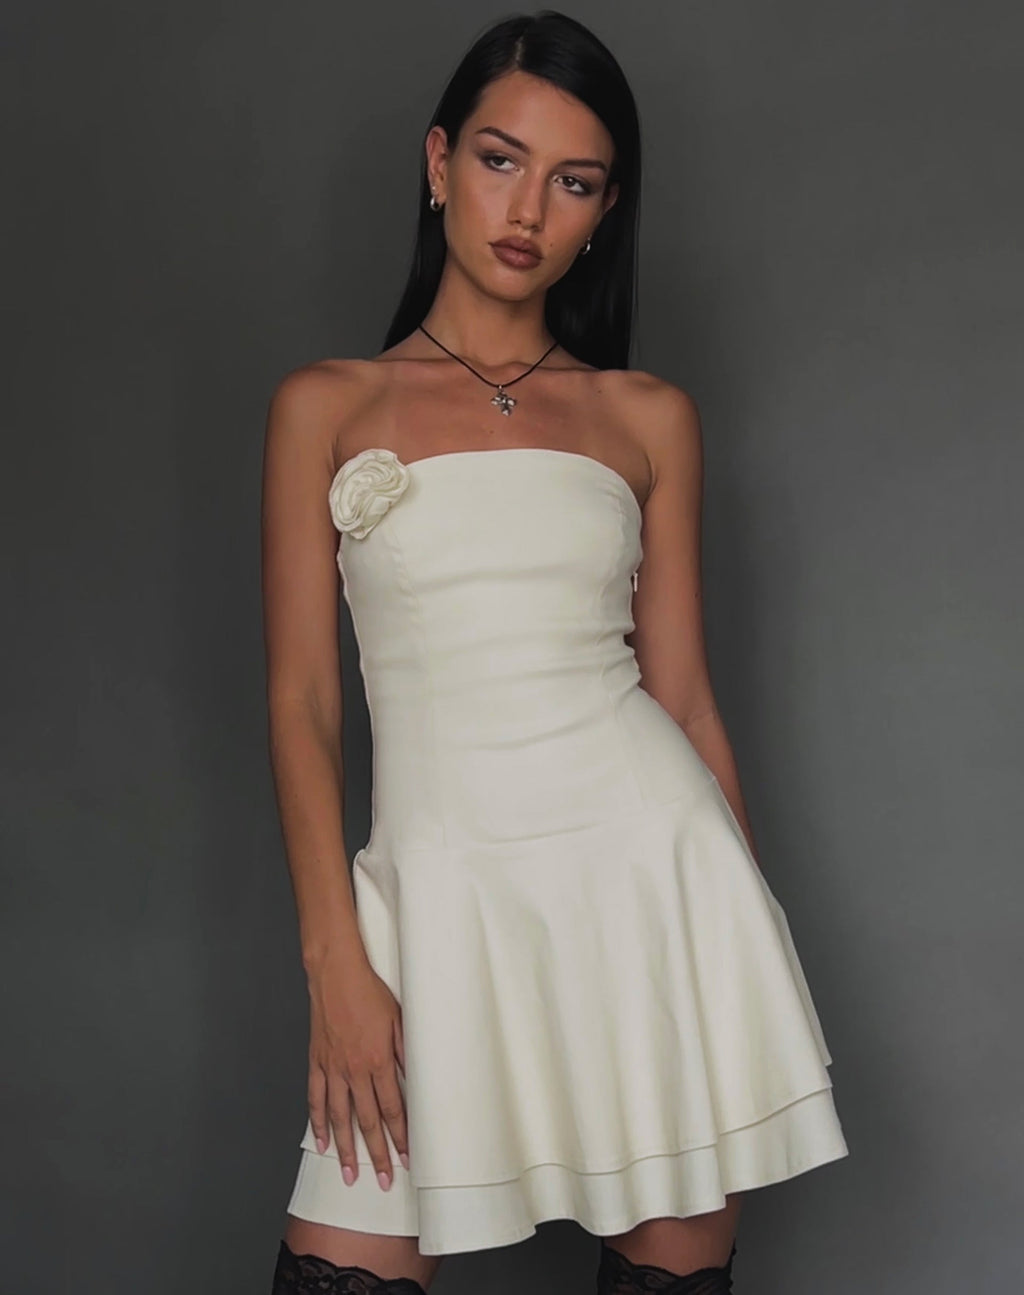 Striata Mini Dress in Cream with Rosette and Lace Back